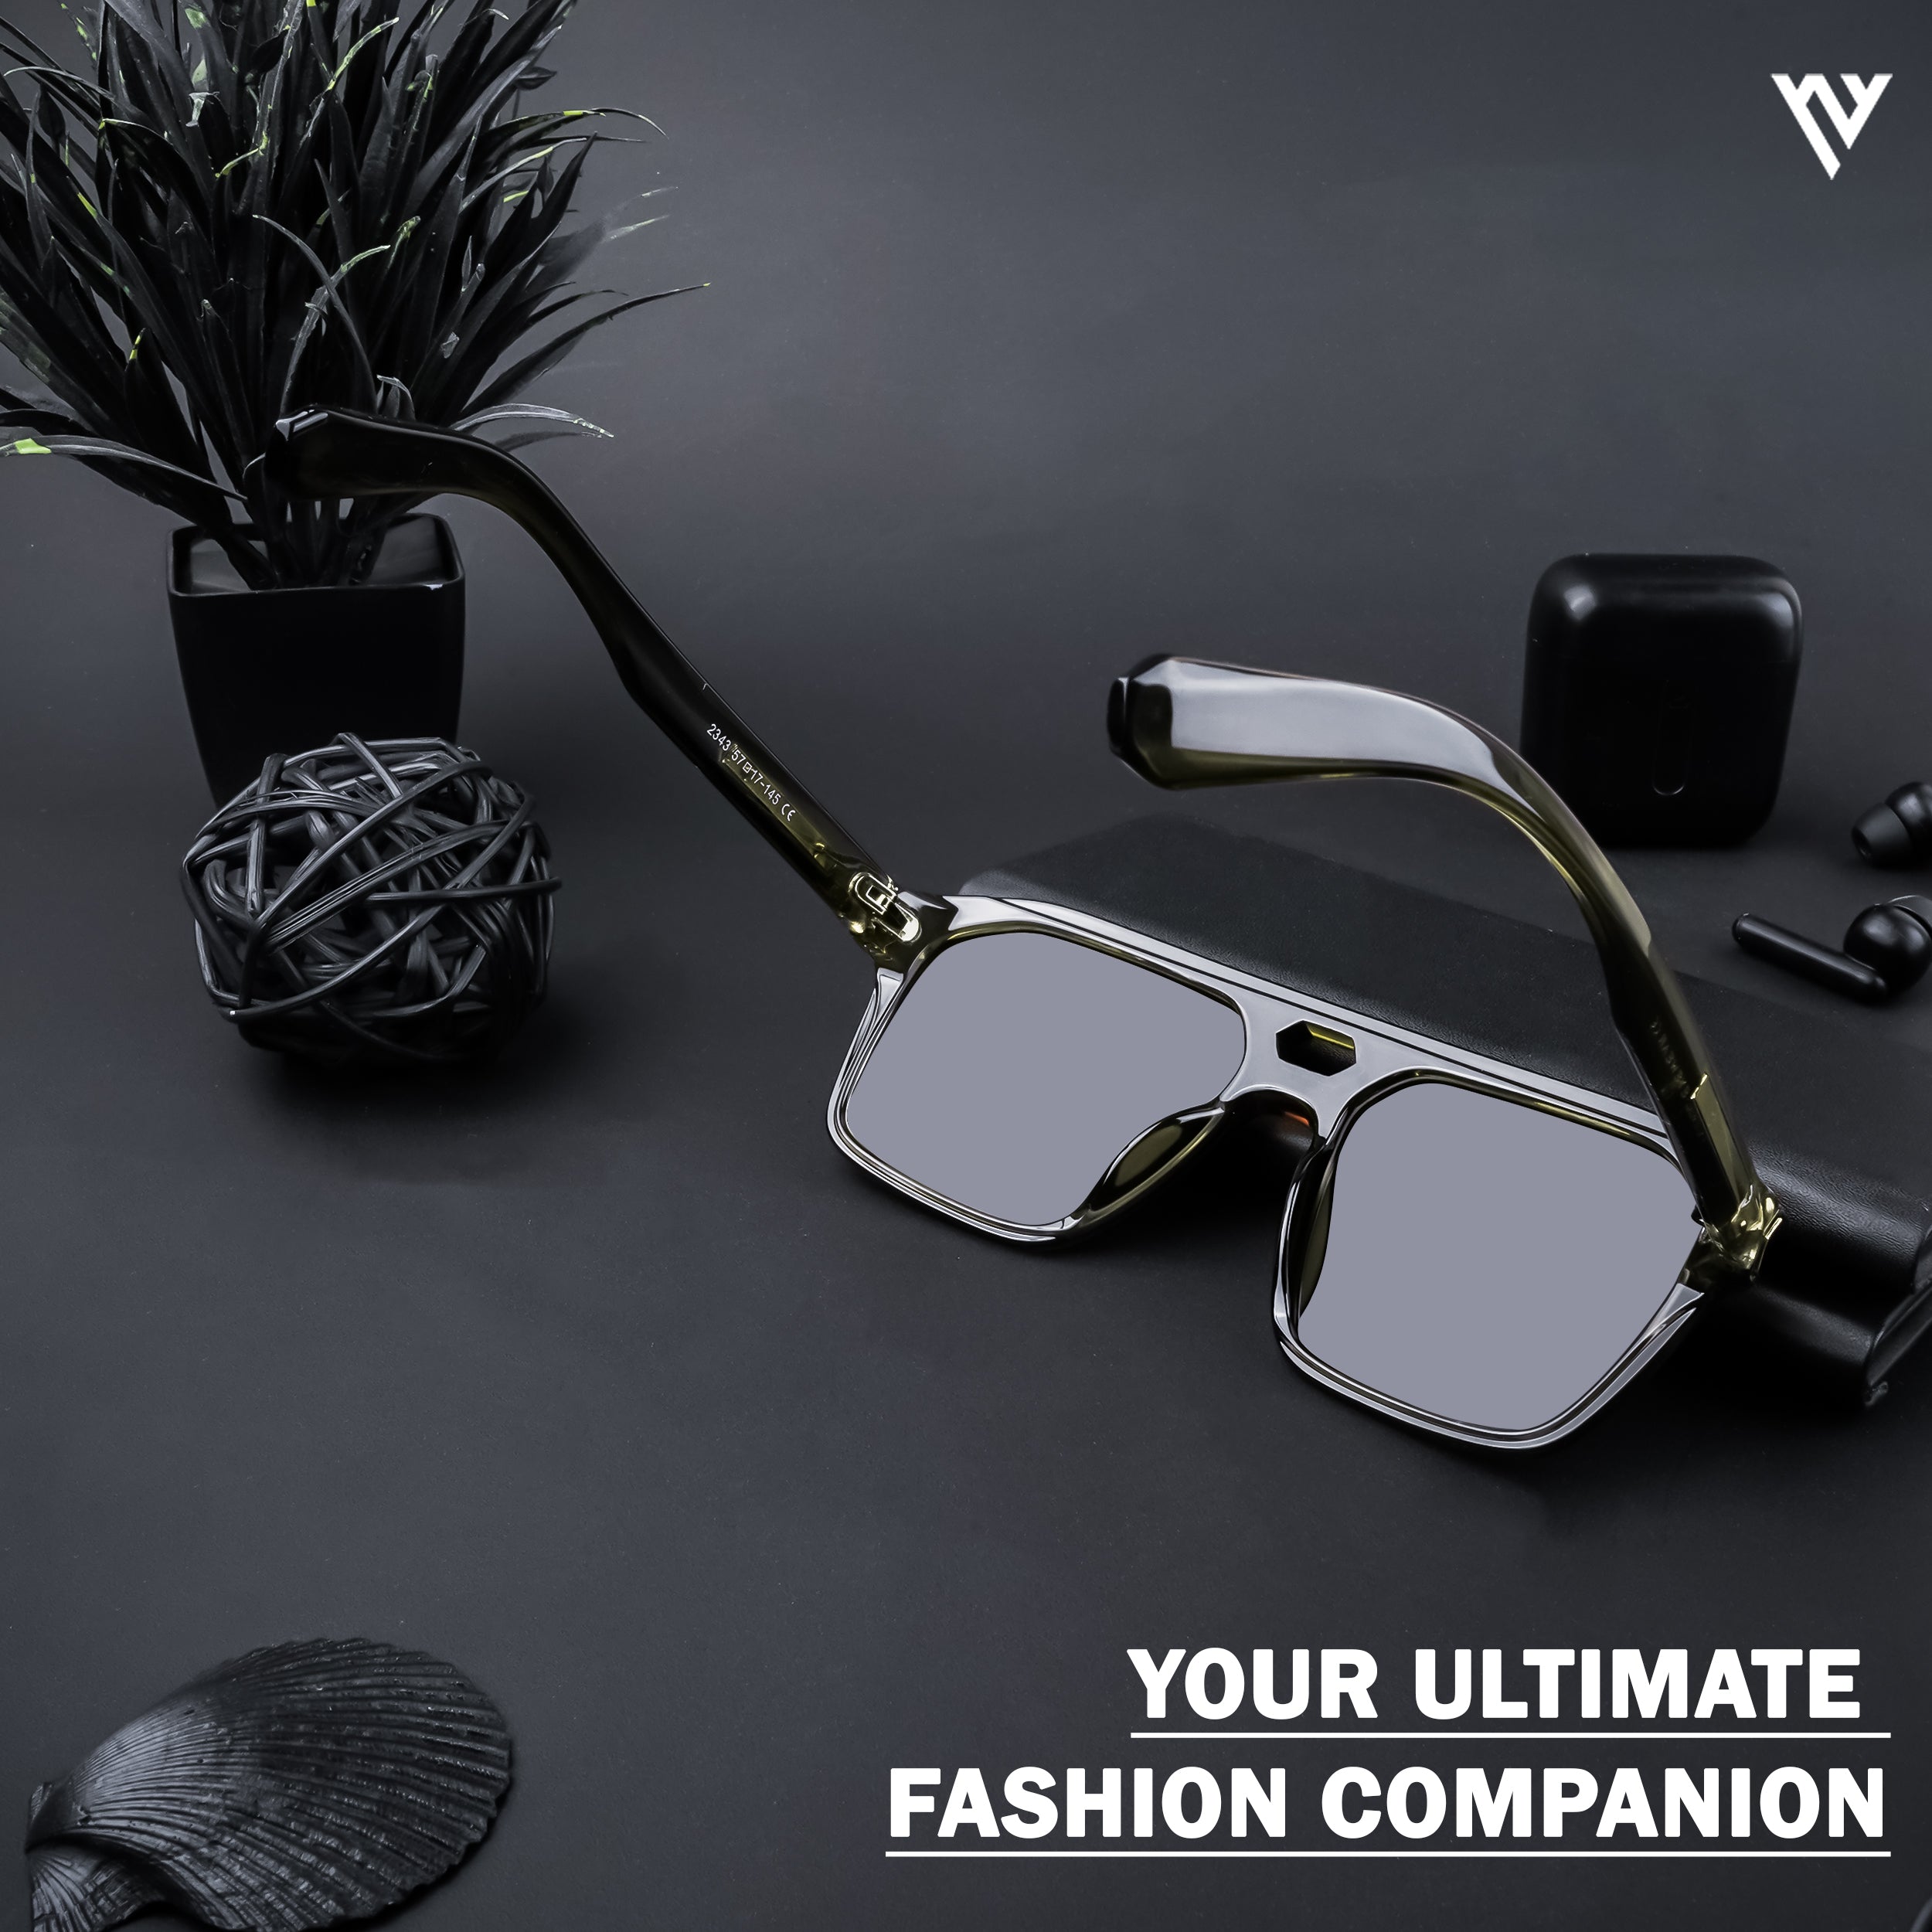 Voyage Exclusive Green Polarized Wayfarer Sunglasses for Men & Women - PMG4347